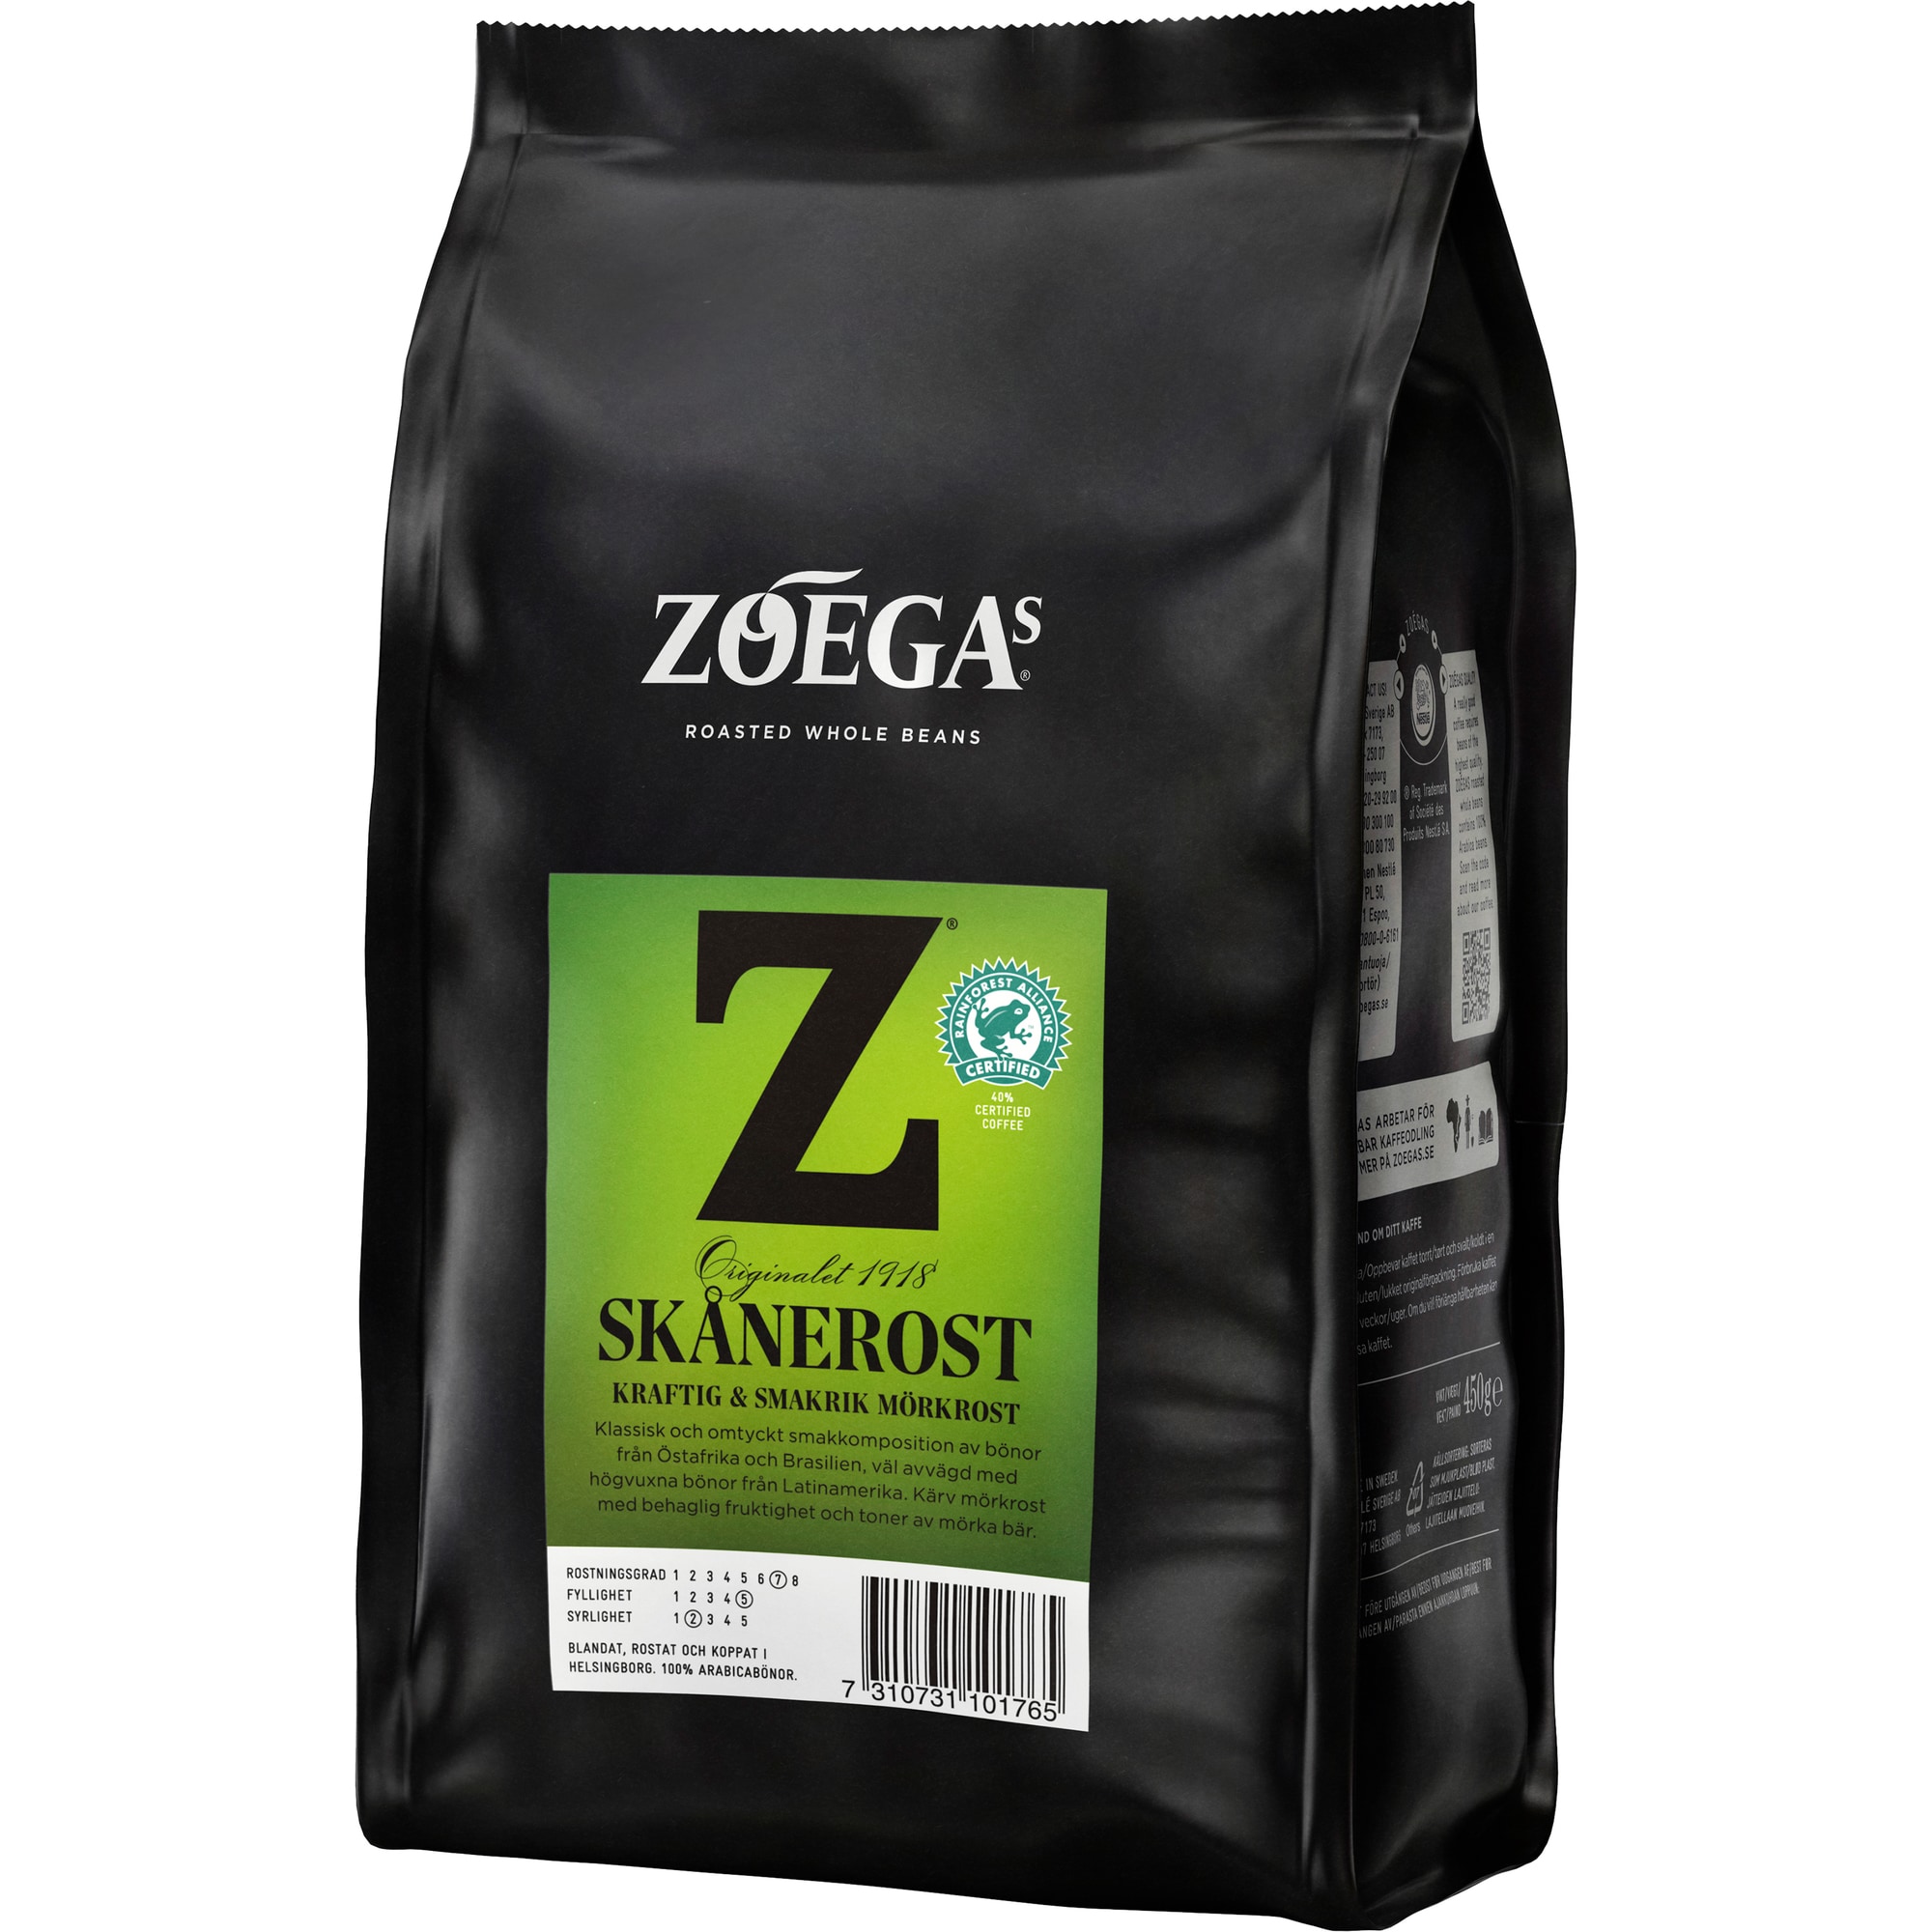 Zoegas Skånerost kaffebønner 12359146